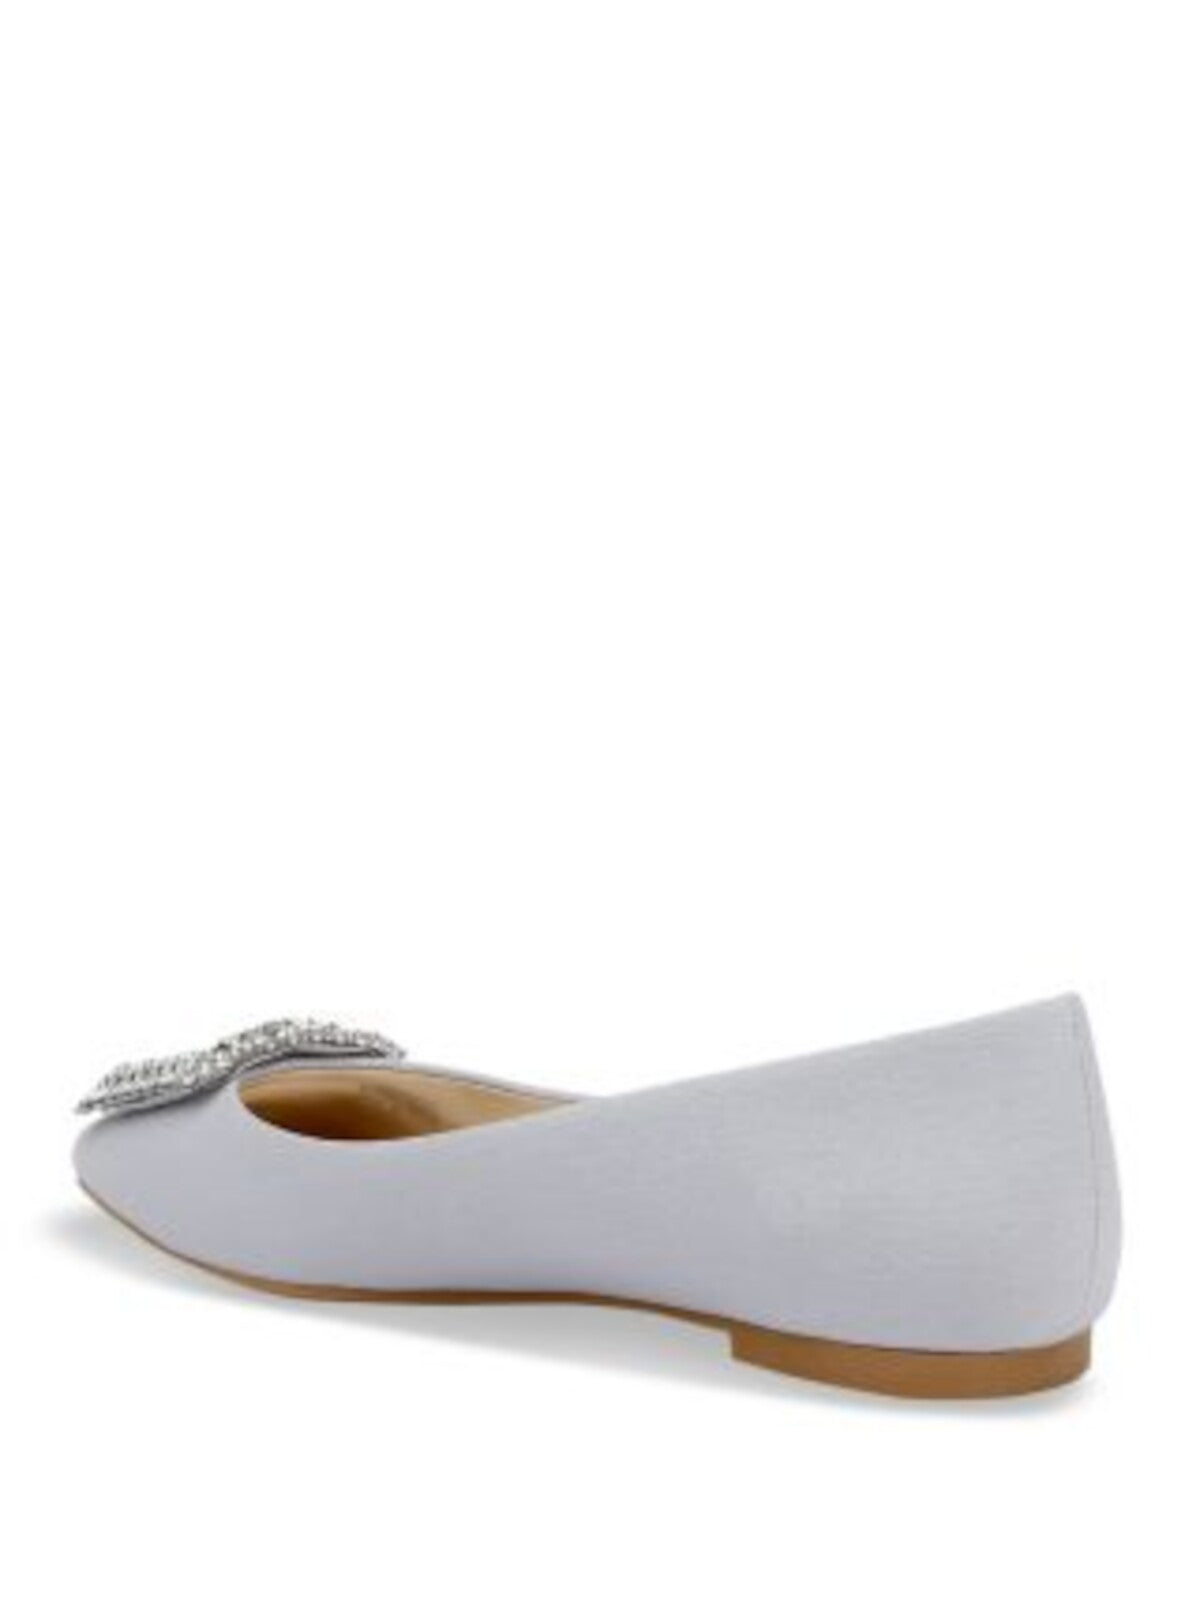 BADGLEY MISCHKA Womens Silver Embellished Hardware Rhinestone Padded Emerie Pointed Toe Slip On Flats Shoes 9